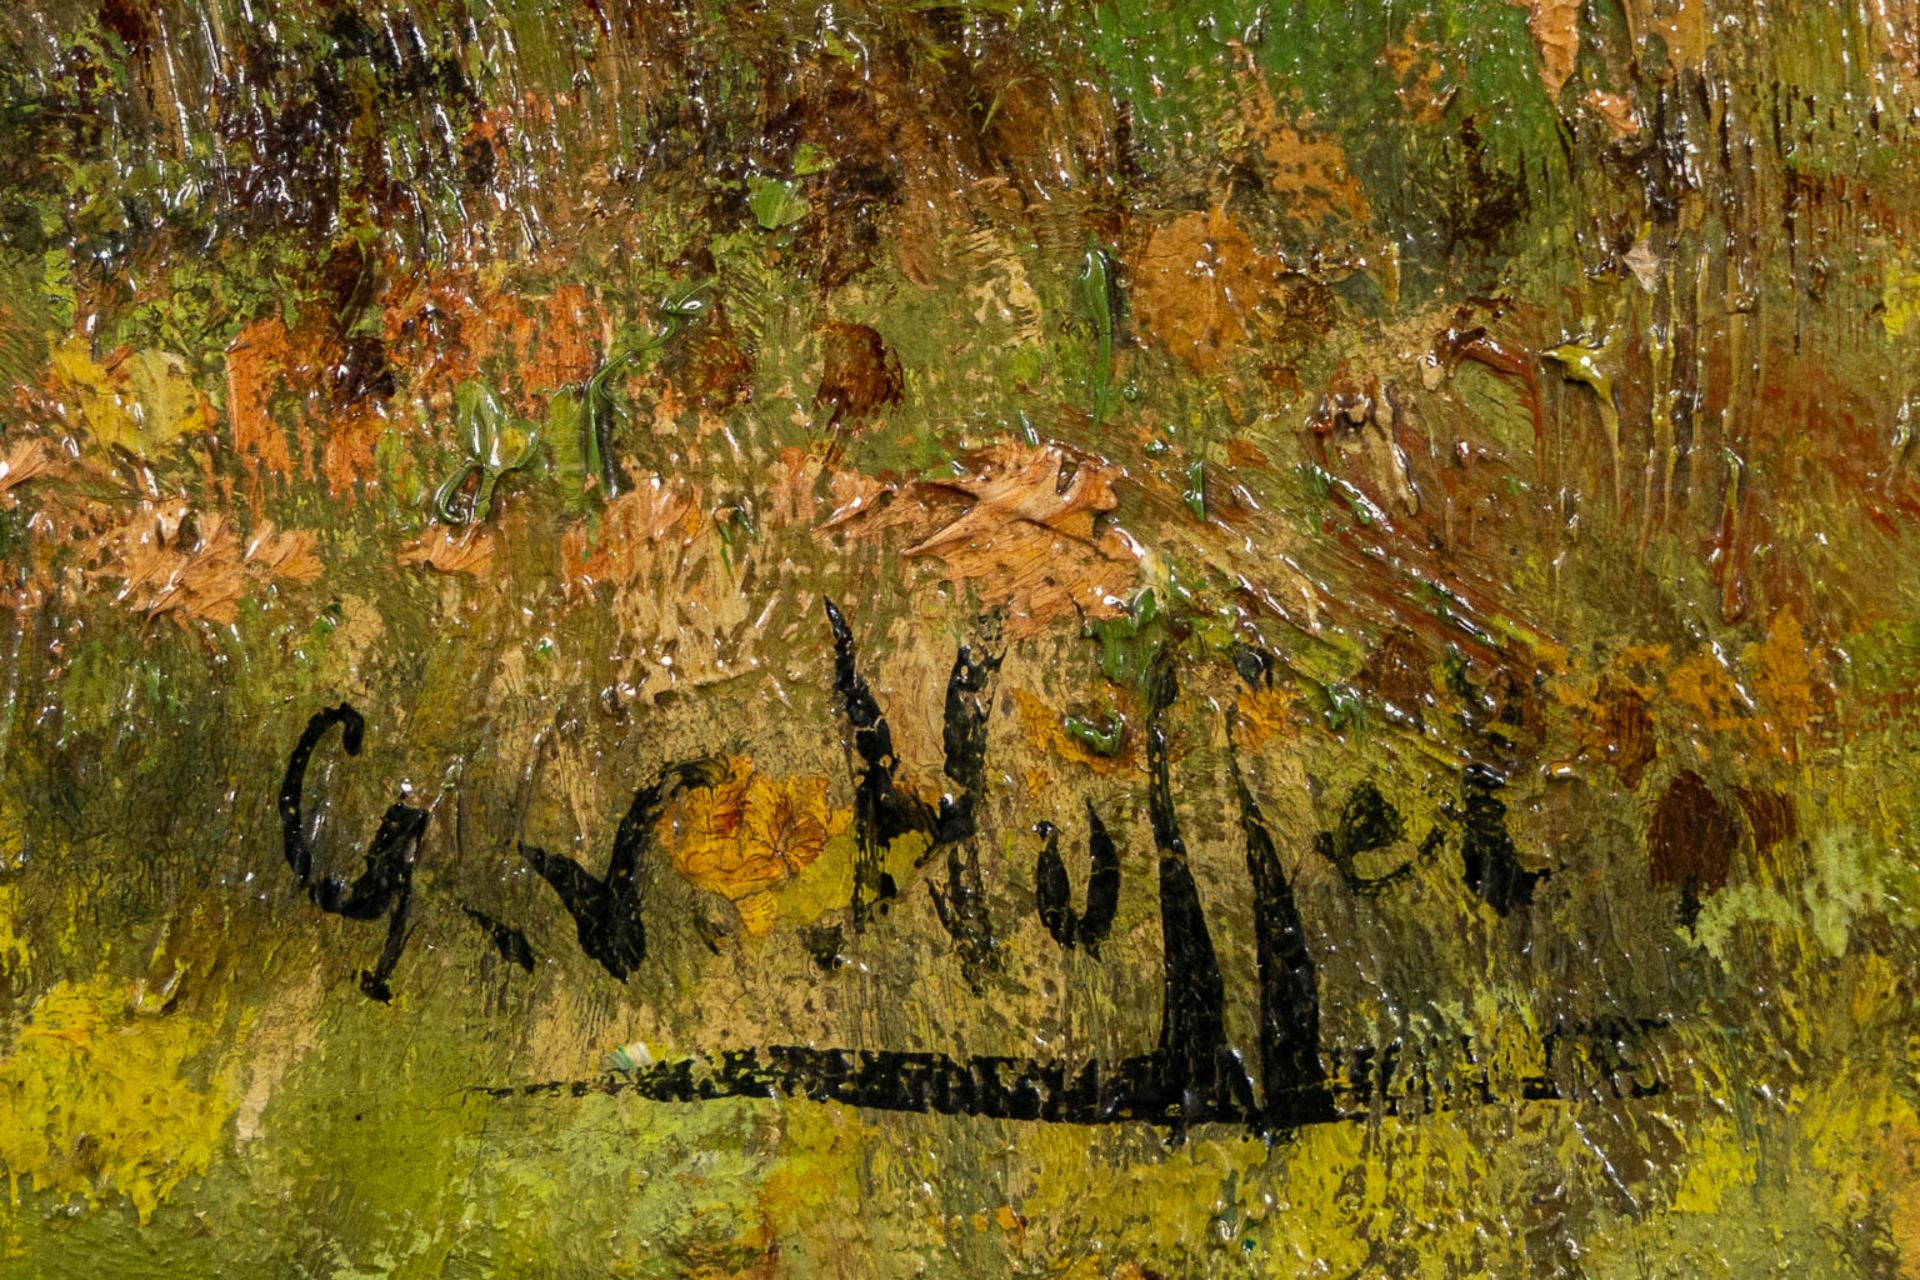 Georges VAN NUFFEL (XIX) 'Dog chasing ducks' oil on canvas. (W:100 x H:70 cm) - Image 8 of 9